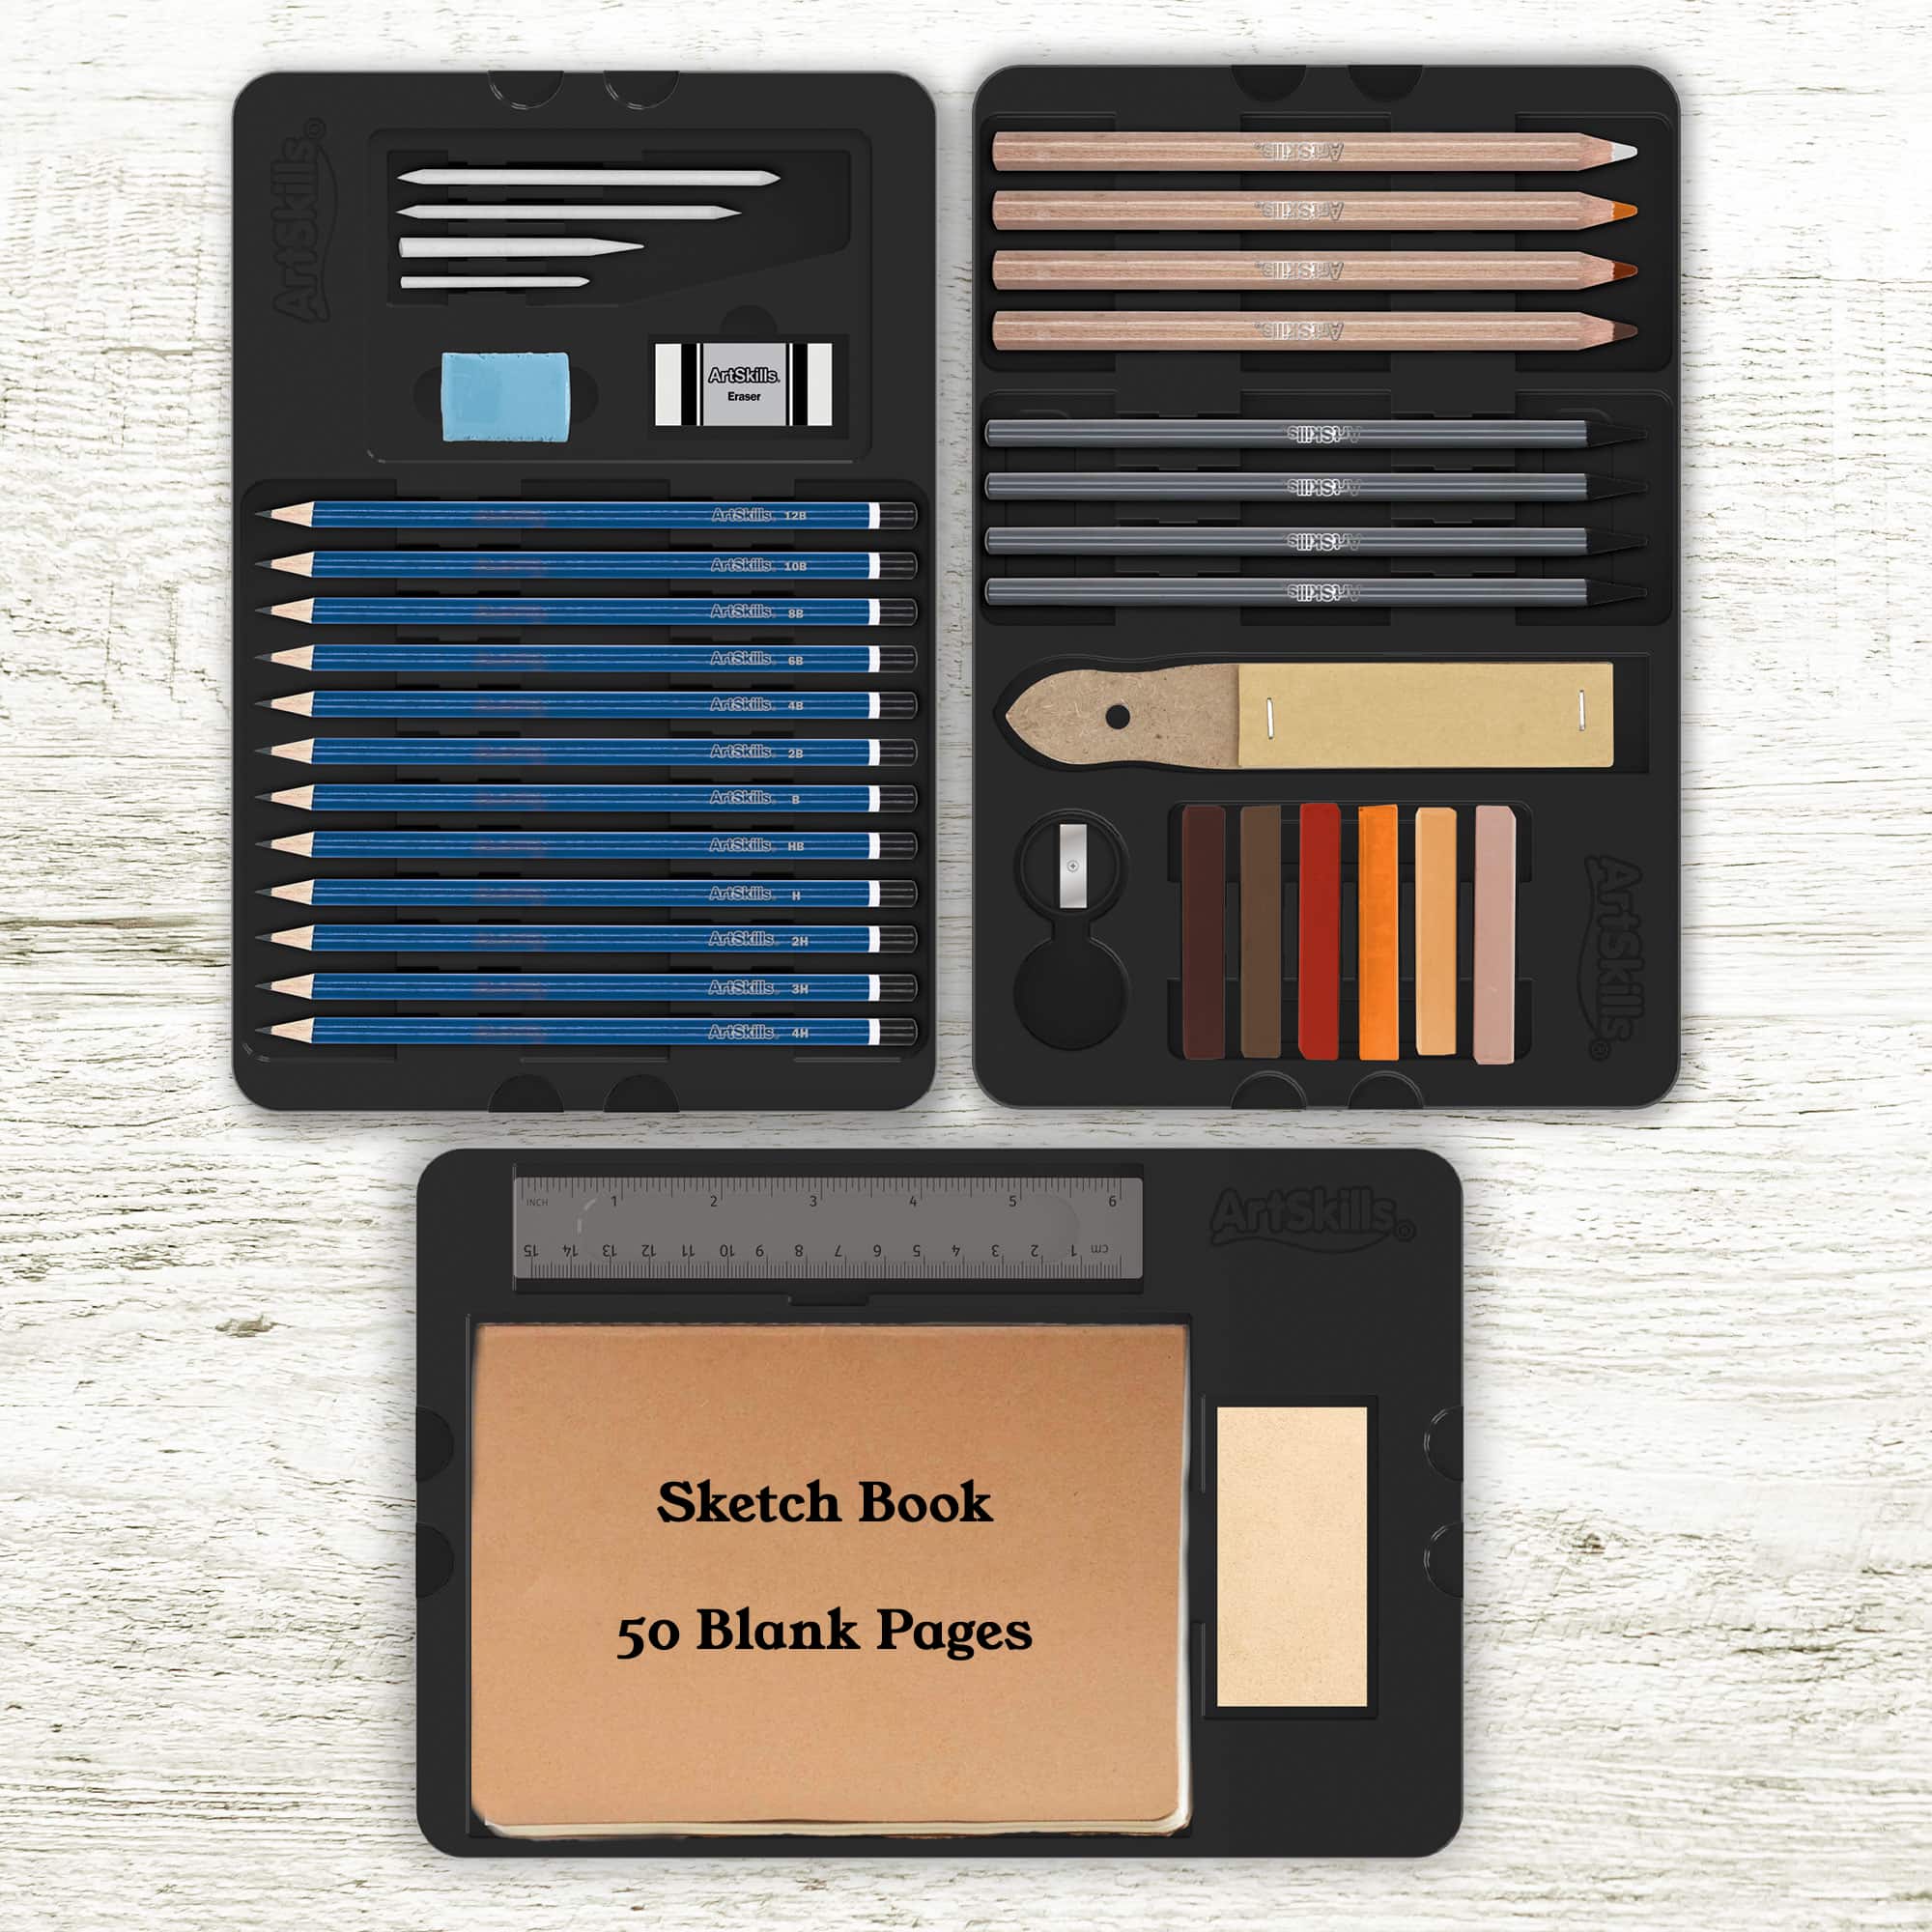 ARTSKILLS Premium Sketch Kit Sketch Like a Pro 3 Trays of Art Supplies!  New!